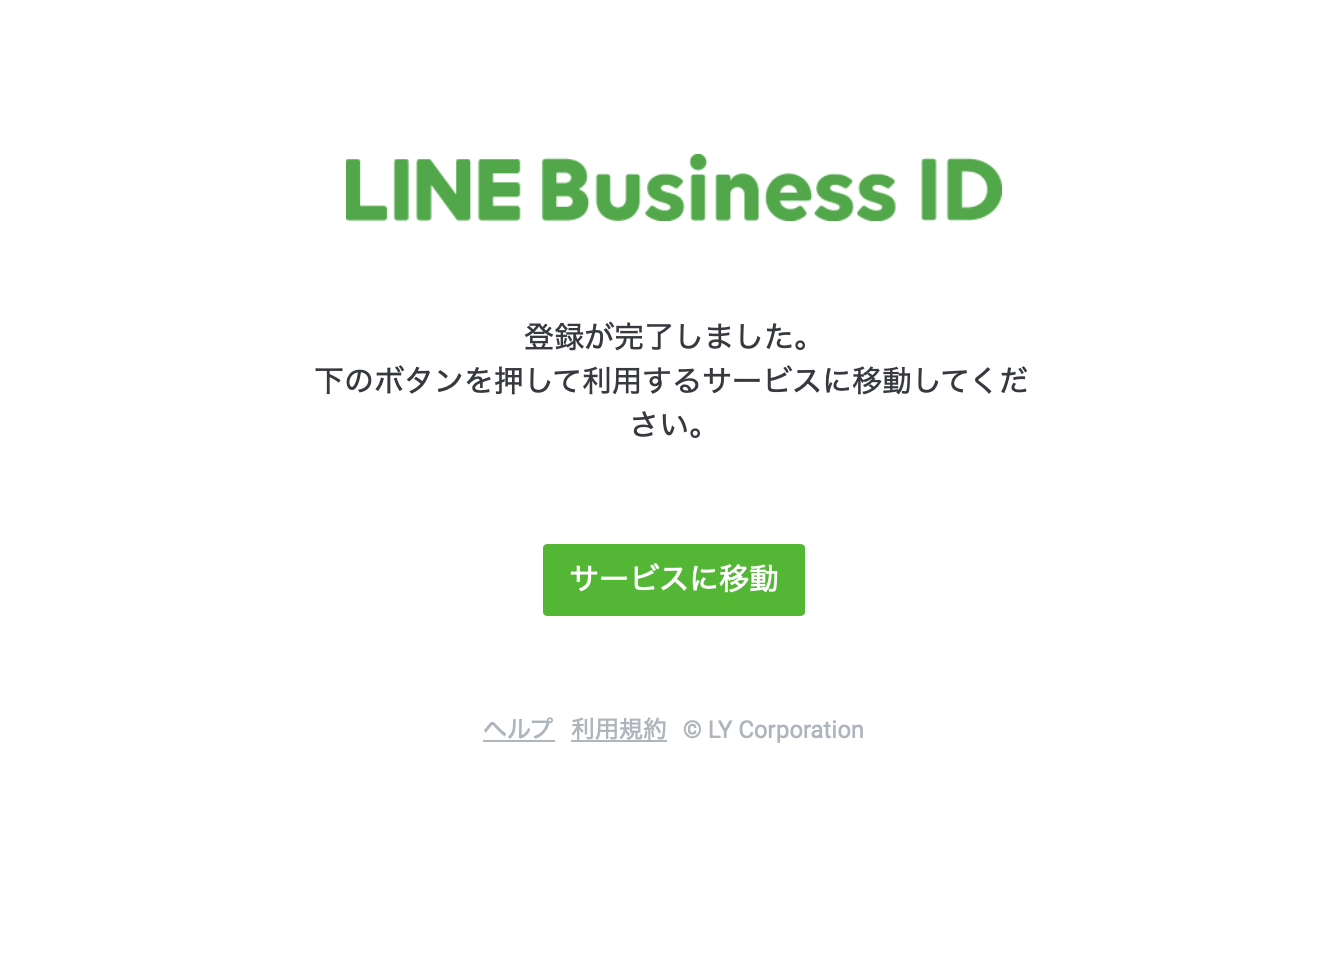 LINE Business ID 登録完了ページ